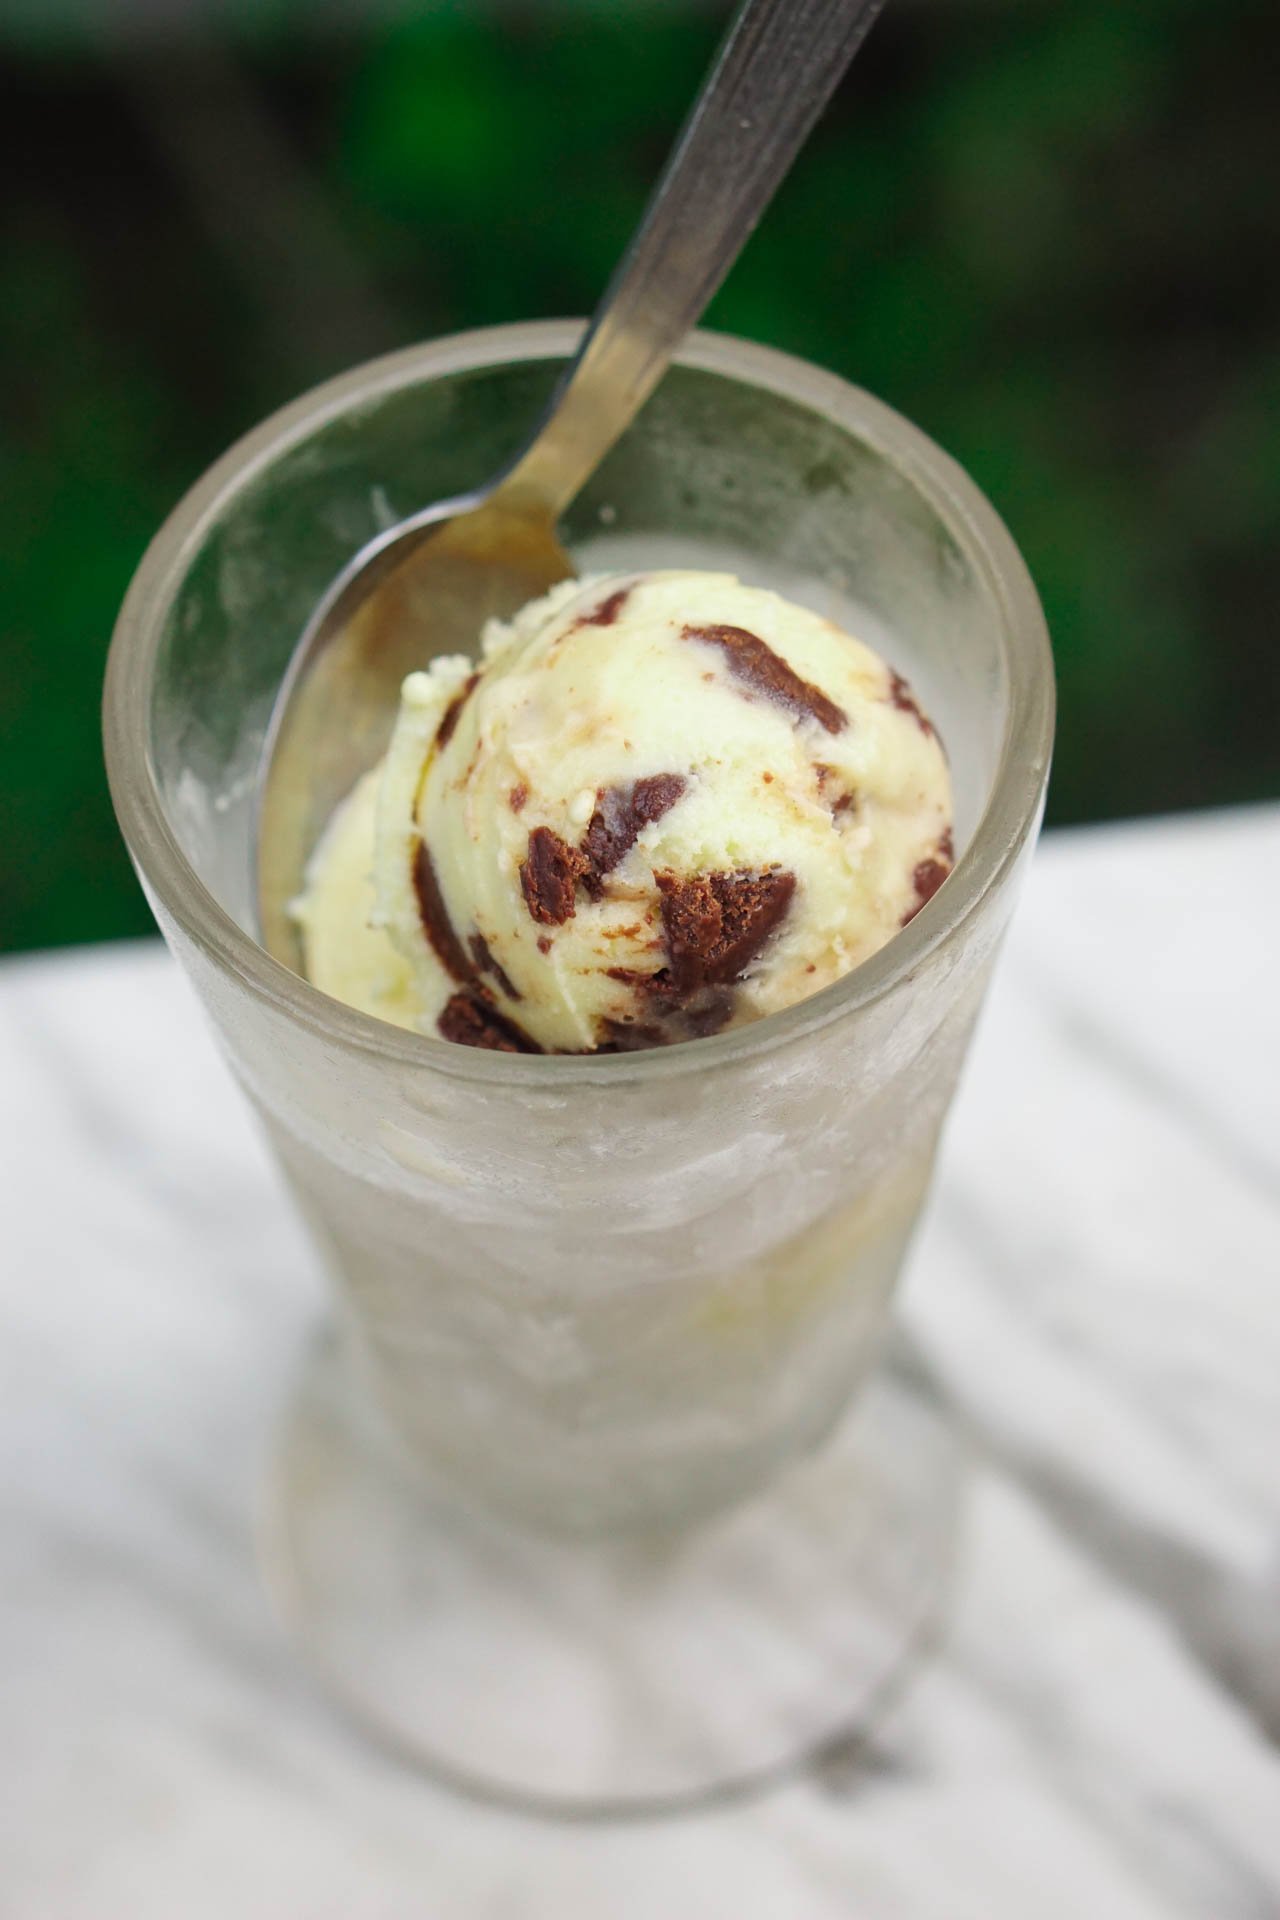 https://www.davidlebovitz.com/wp-content/uploads/2009/05/Absinthe-ice-cream-recipe-7.jpg